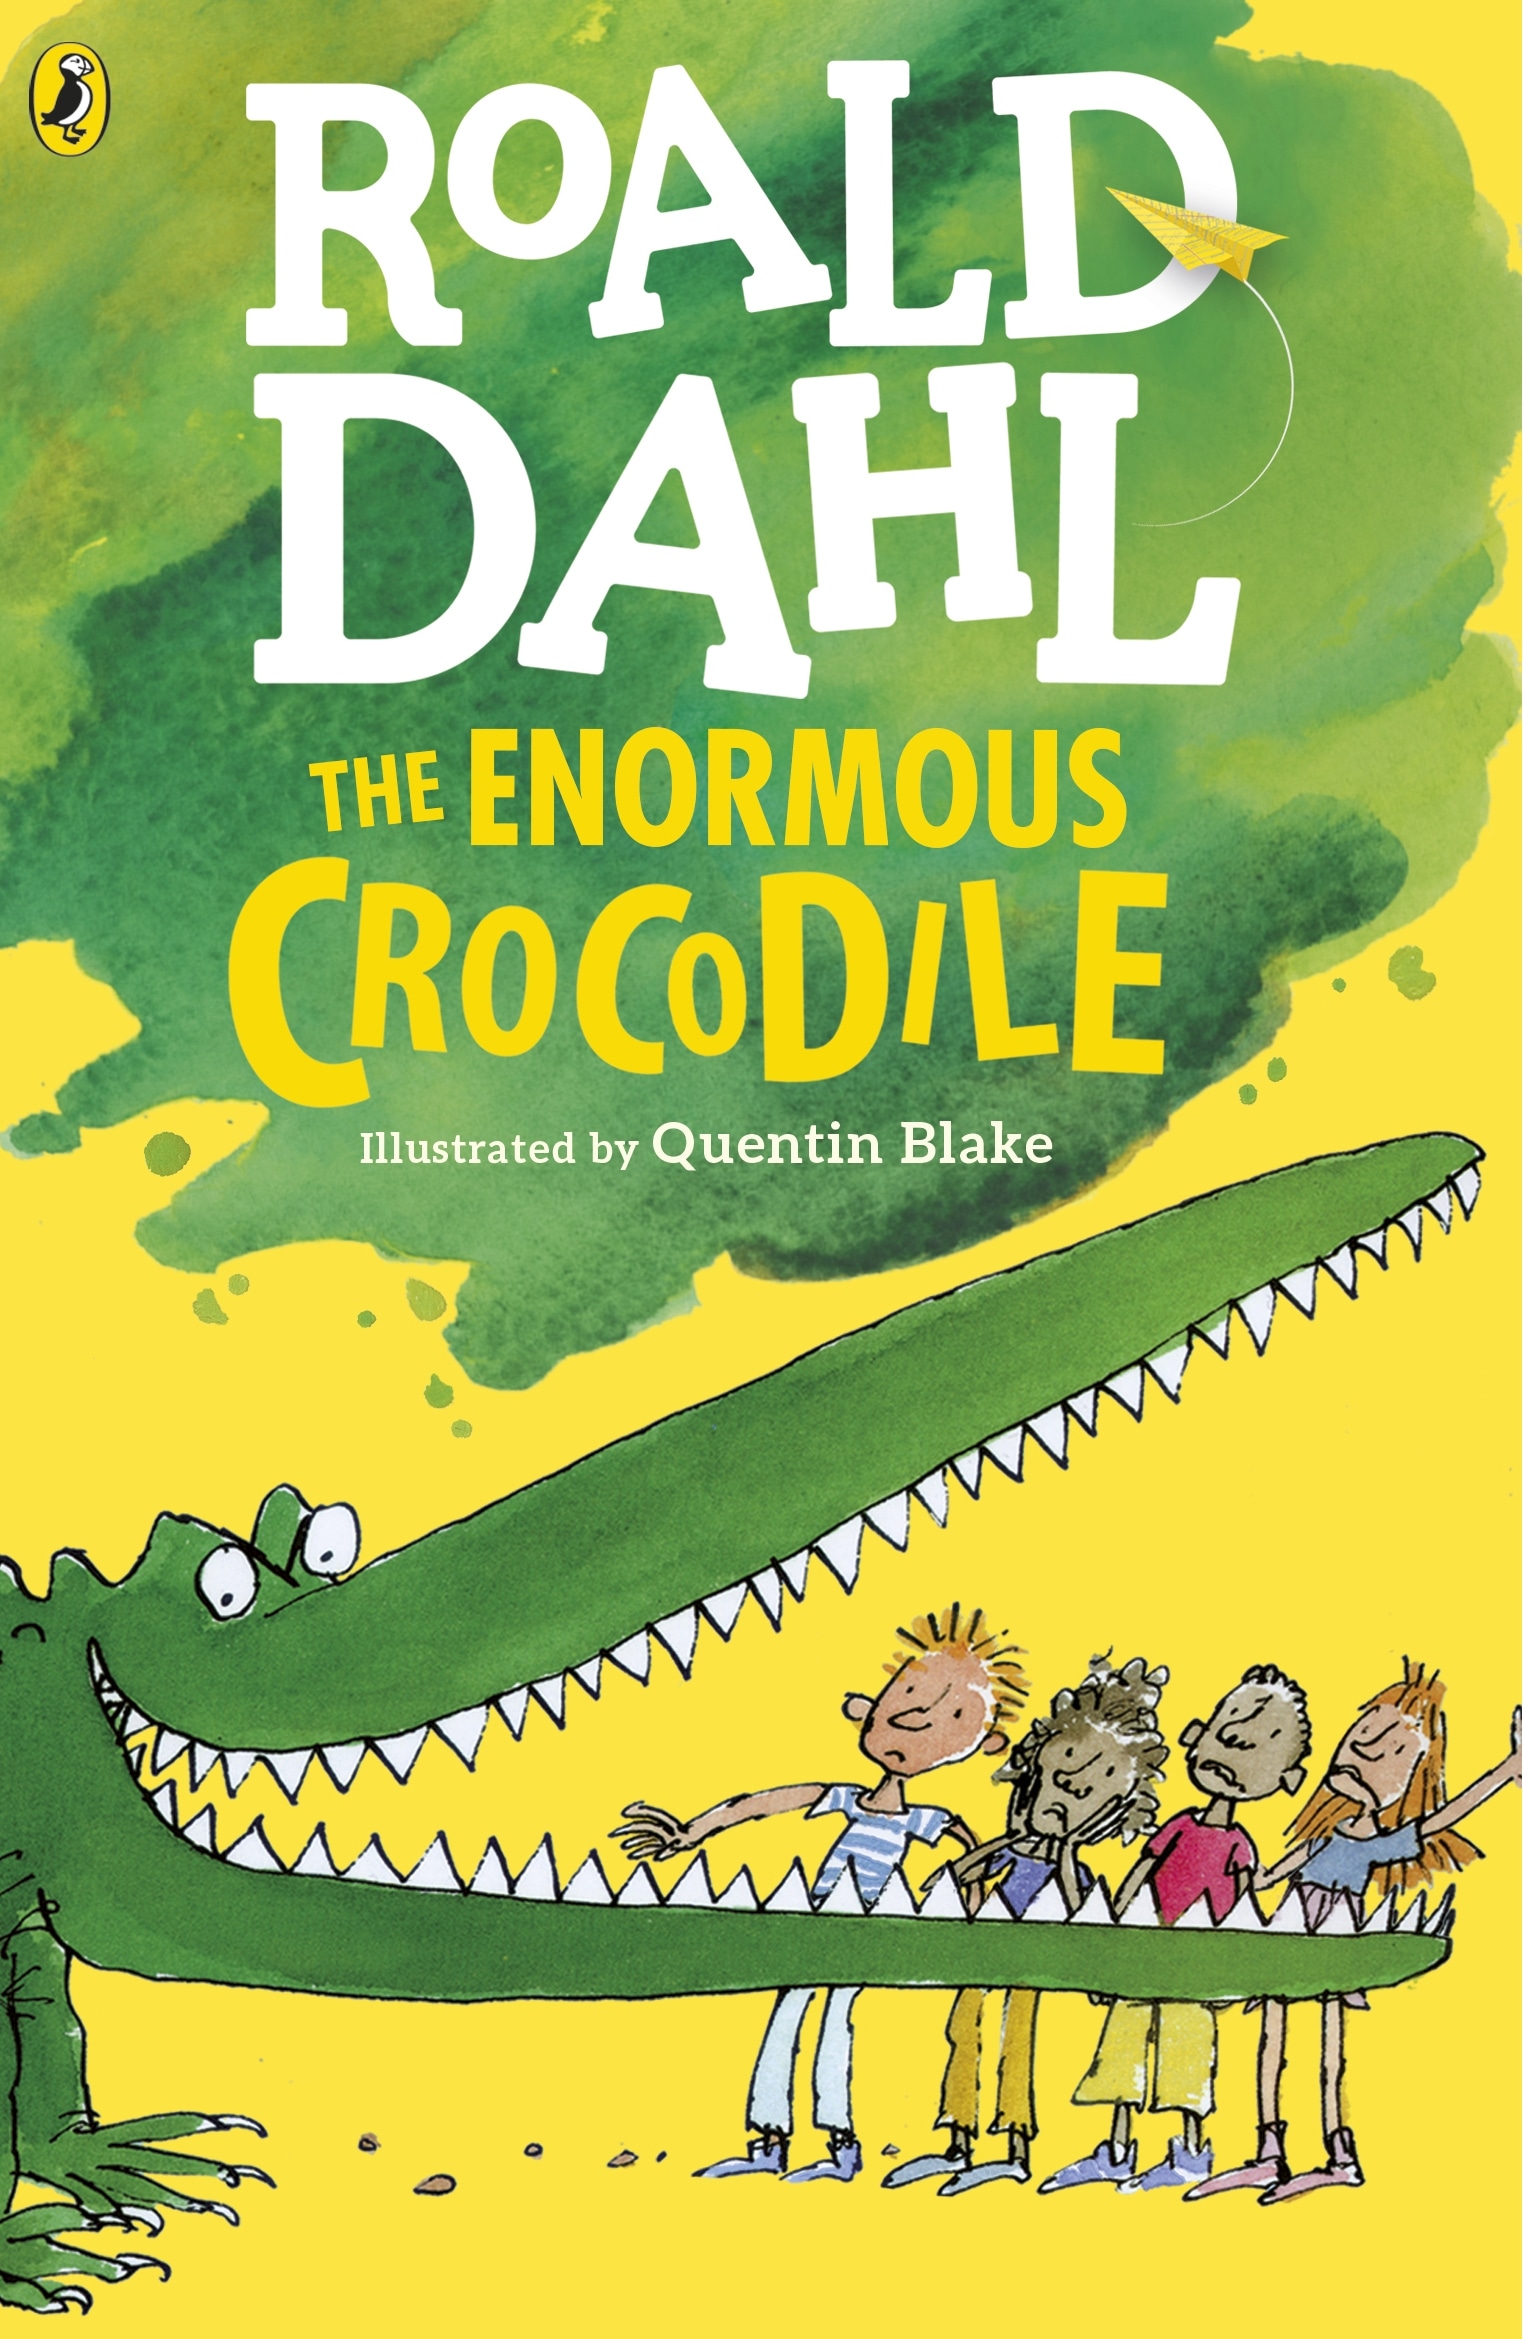 Book “The Enormous Crocodile” by Roald Dahl — March 3, 2016